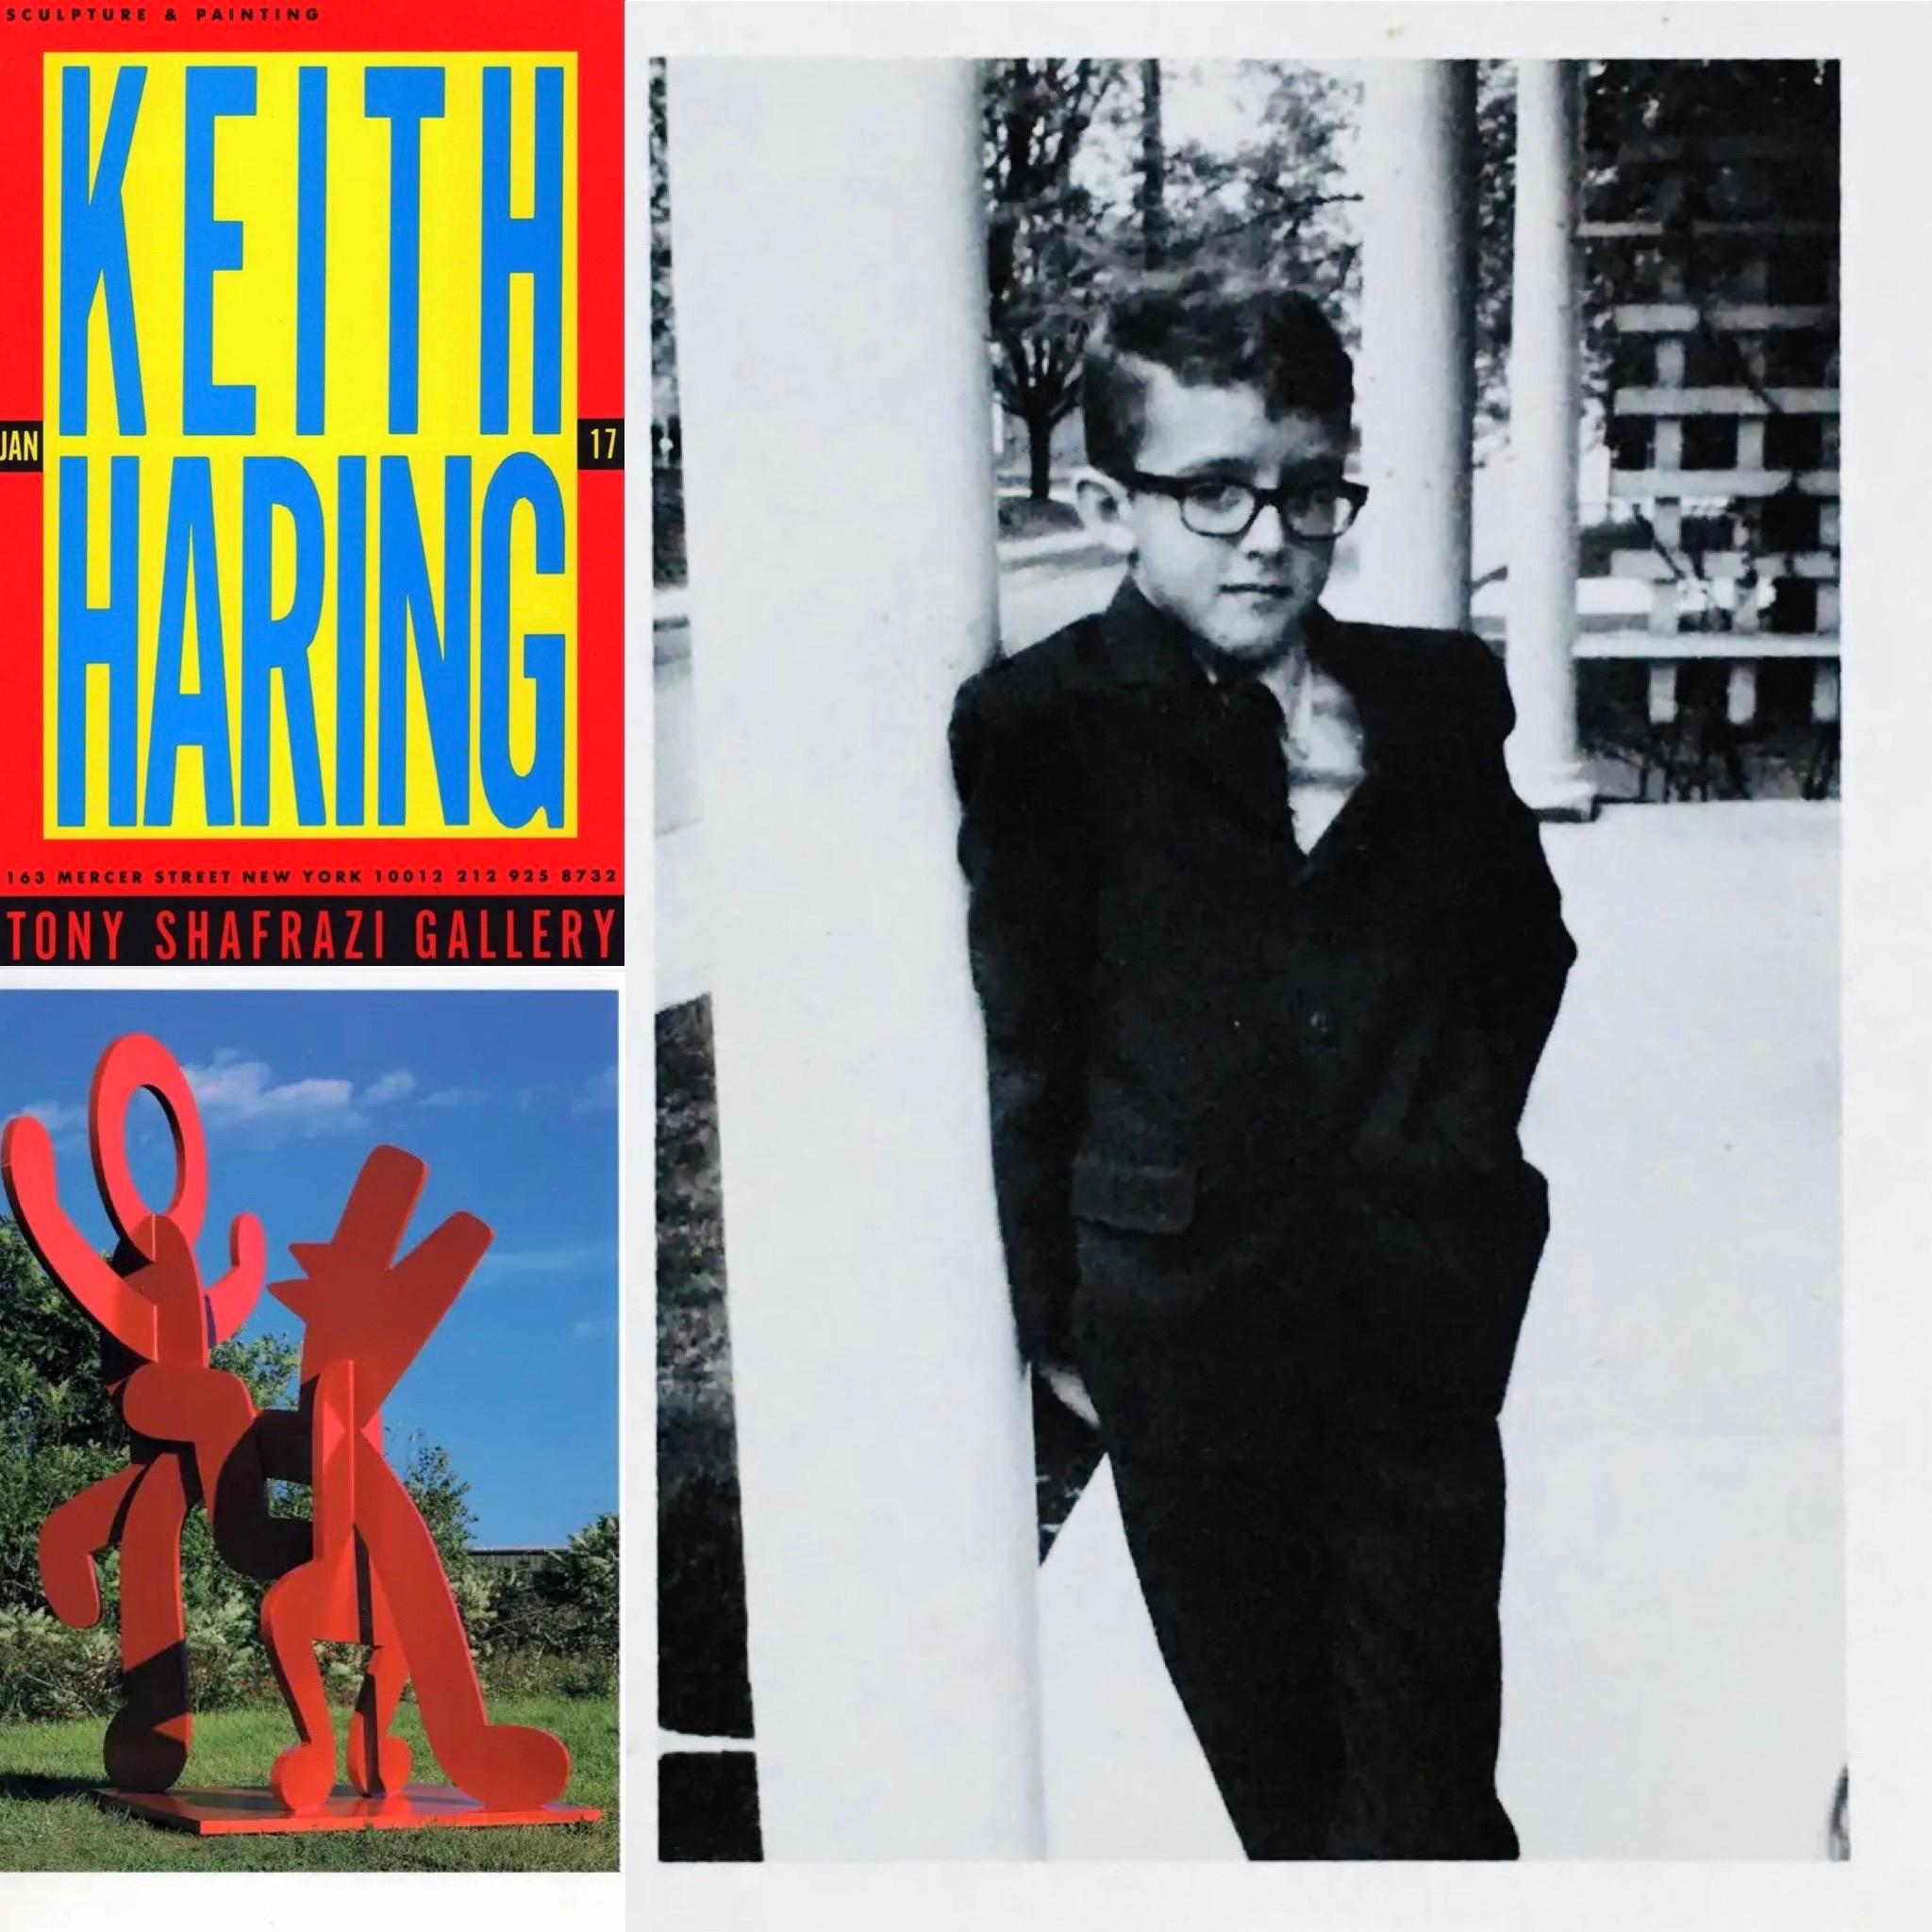 Keith Haring at Tony Shafrazi Gallery (set of 3 vintage Haring collectibles) 